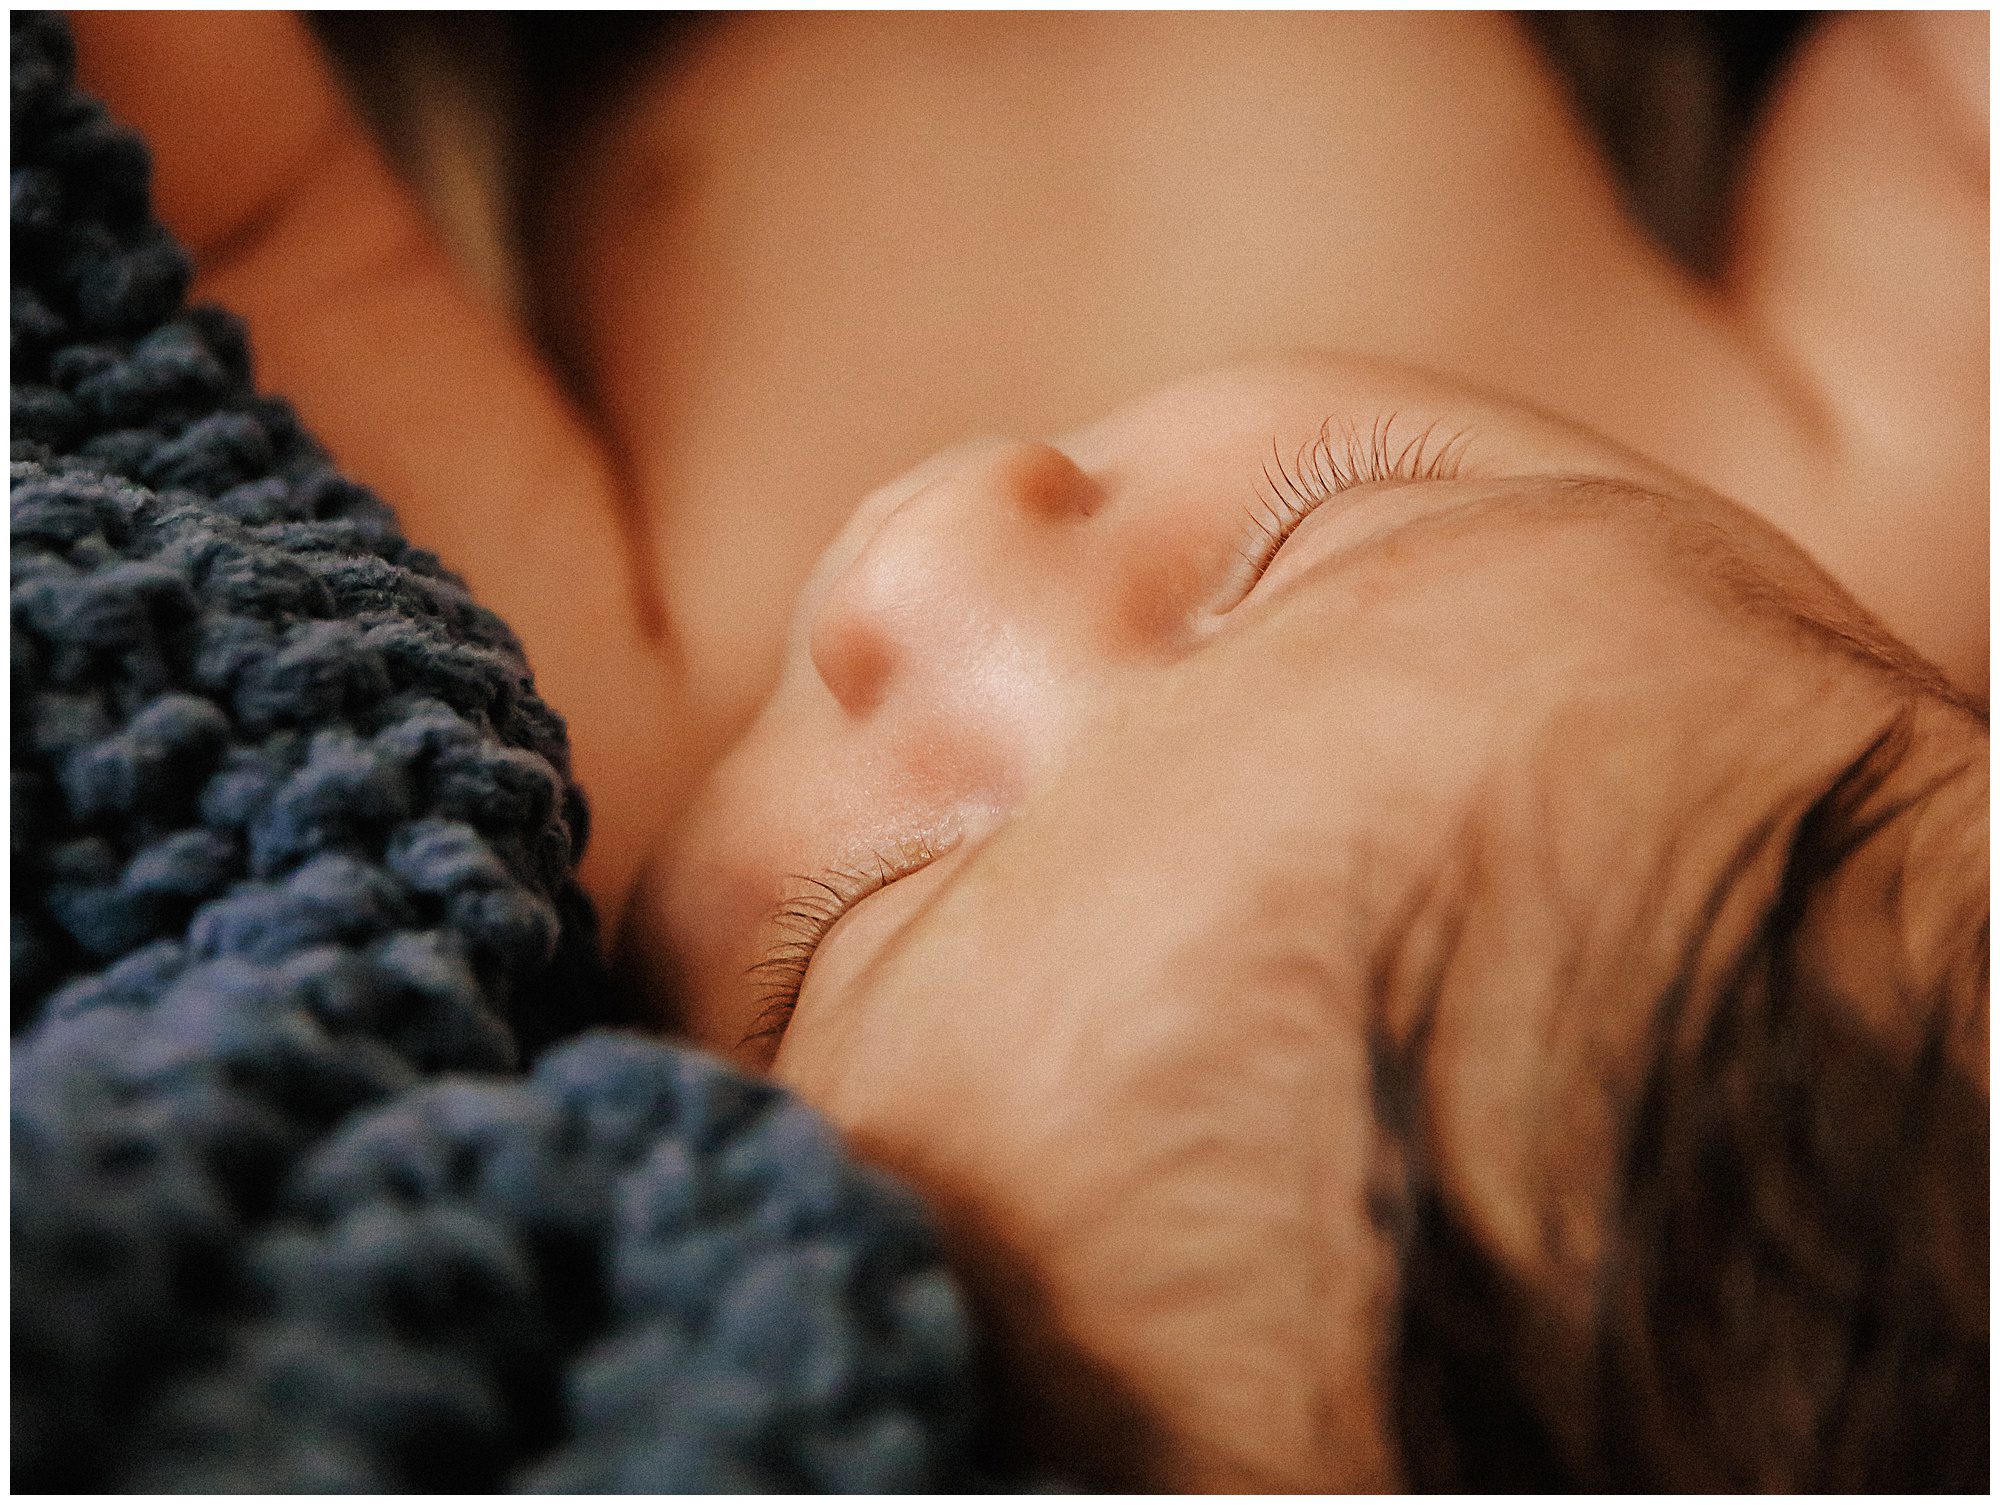 Portrait of newborn baby boy smiling, laying in dark blue knit blanket